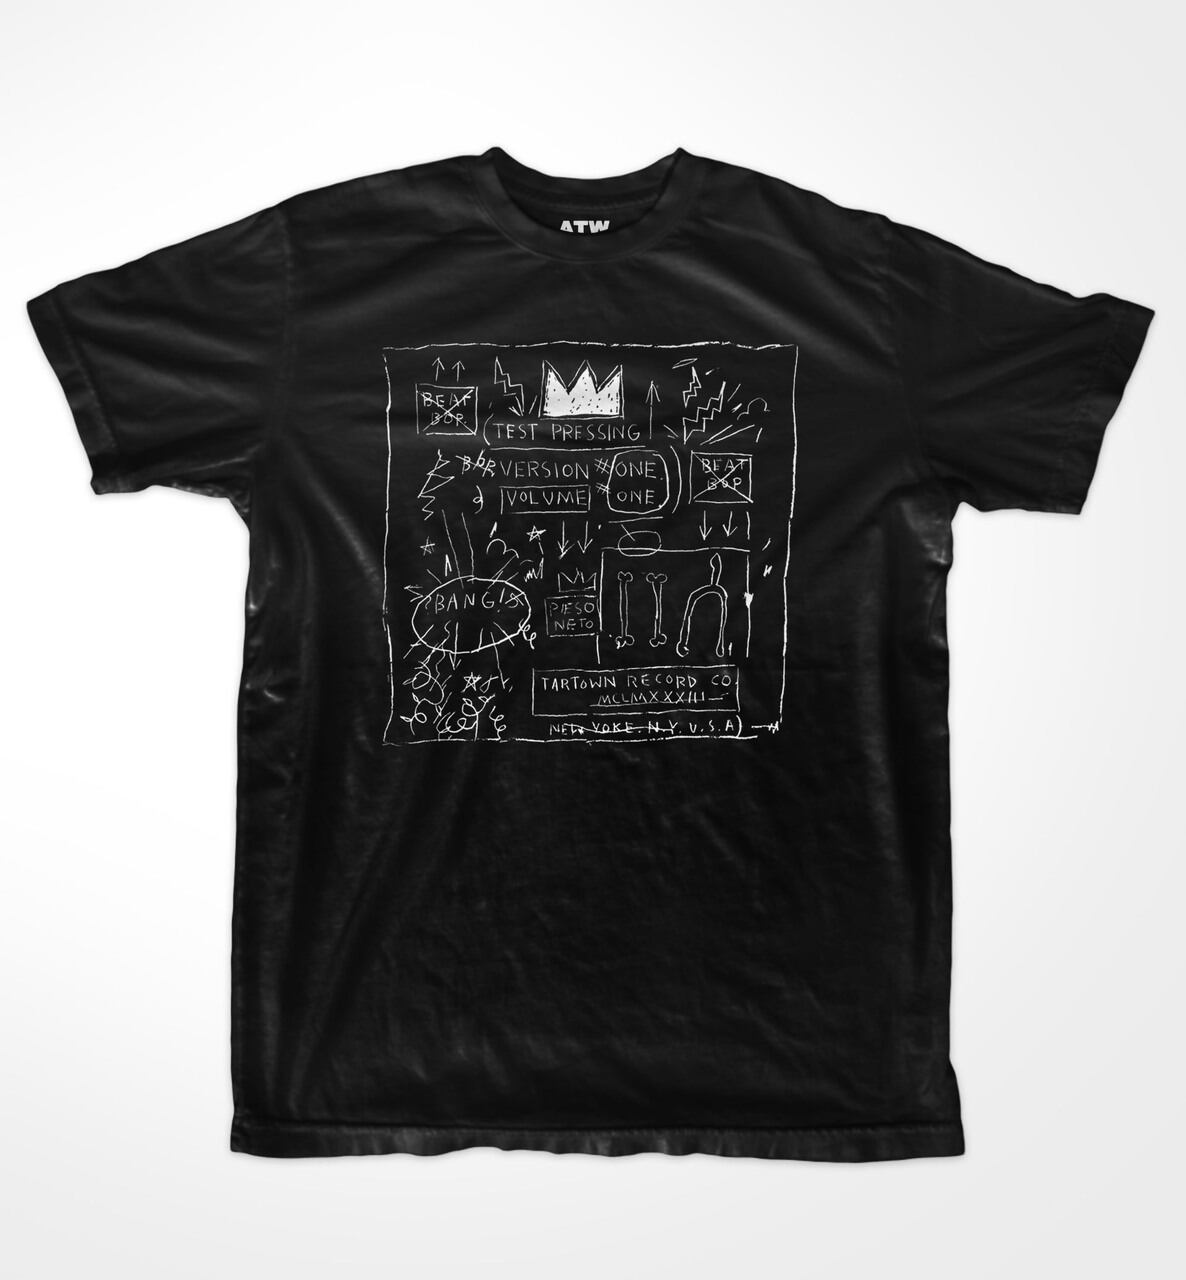 Basquiat RAMMELLZEE VS K-ROB Beat Bop T-shirts DELIC-A-TESSEN